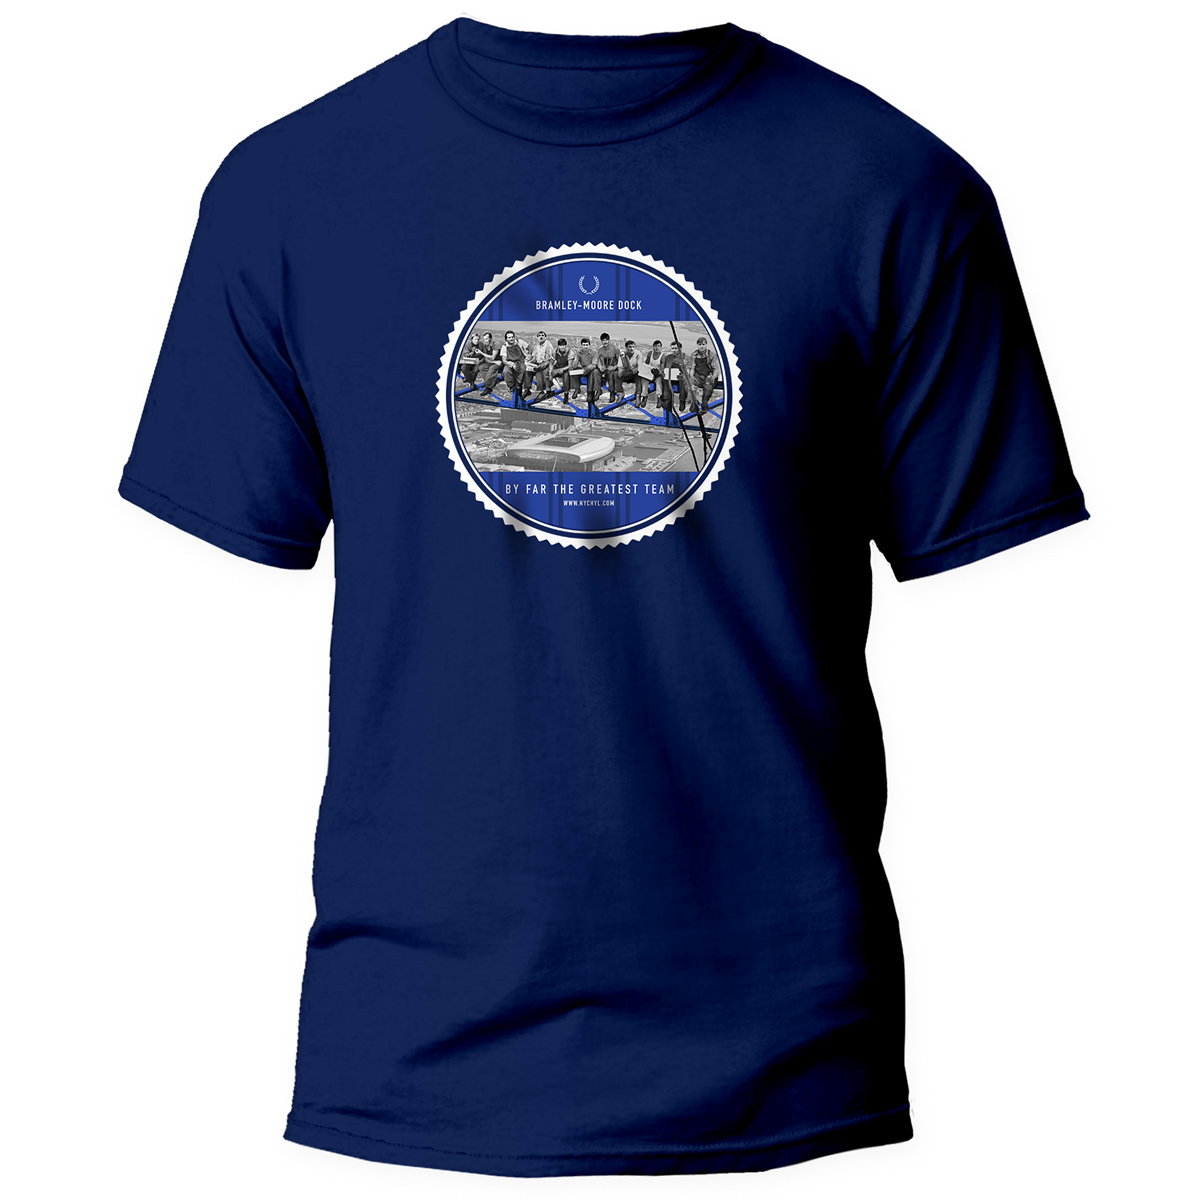 Bramley Moore 1985 – NYCHYL Everton T-shirts